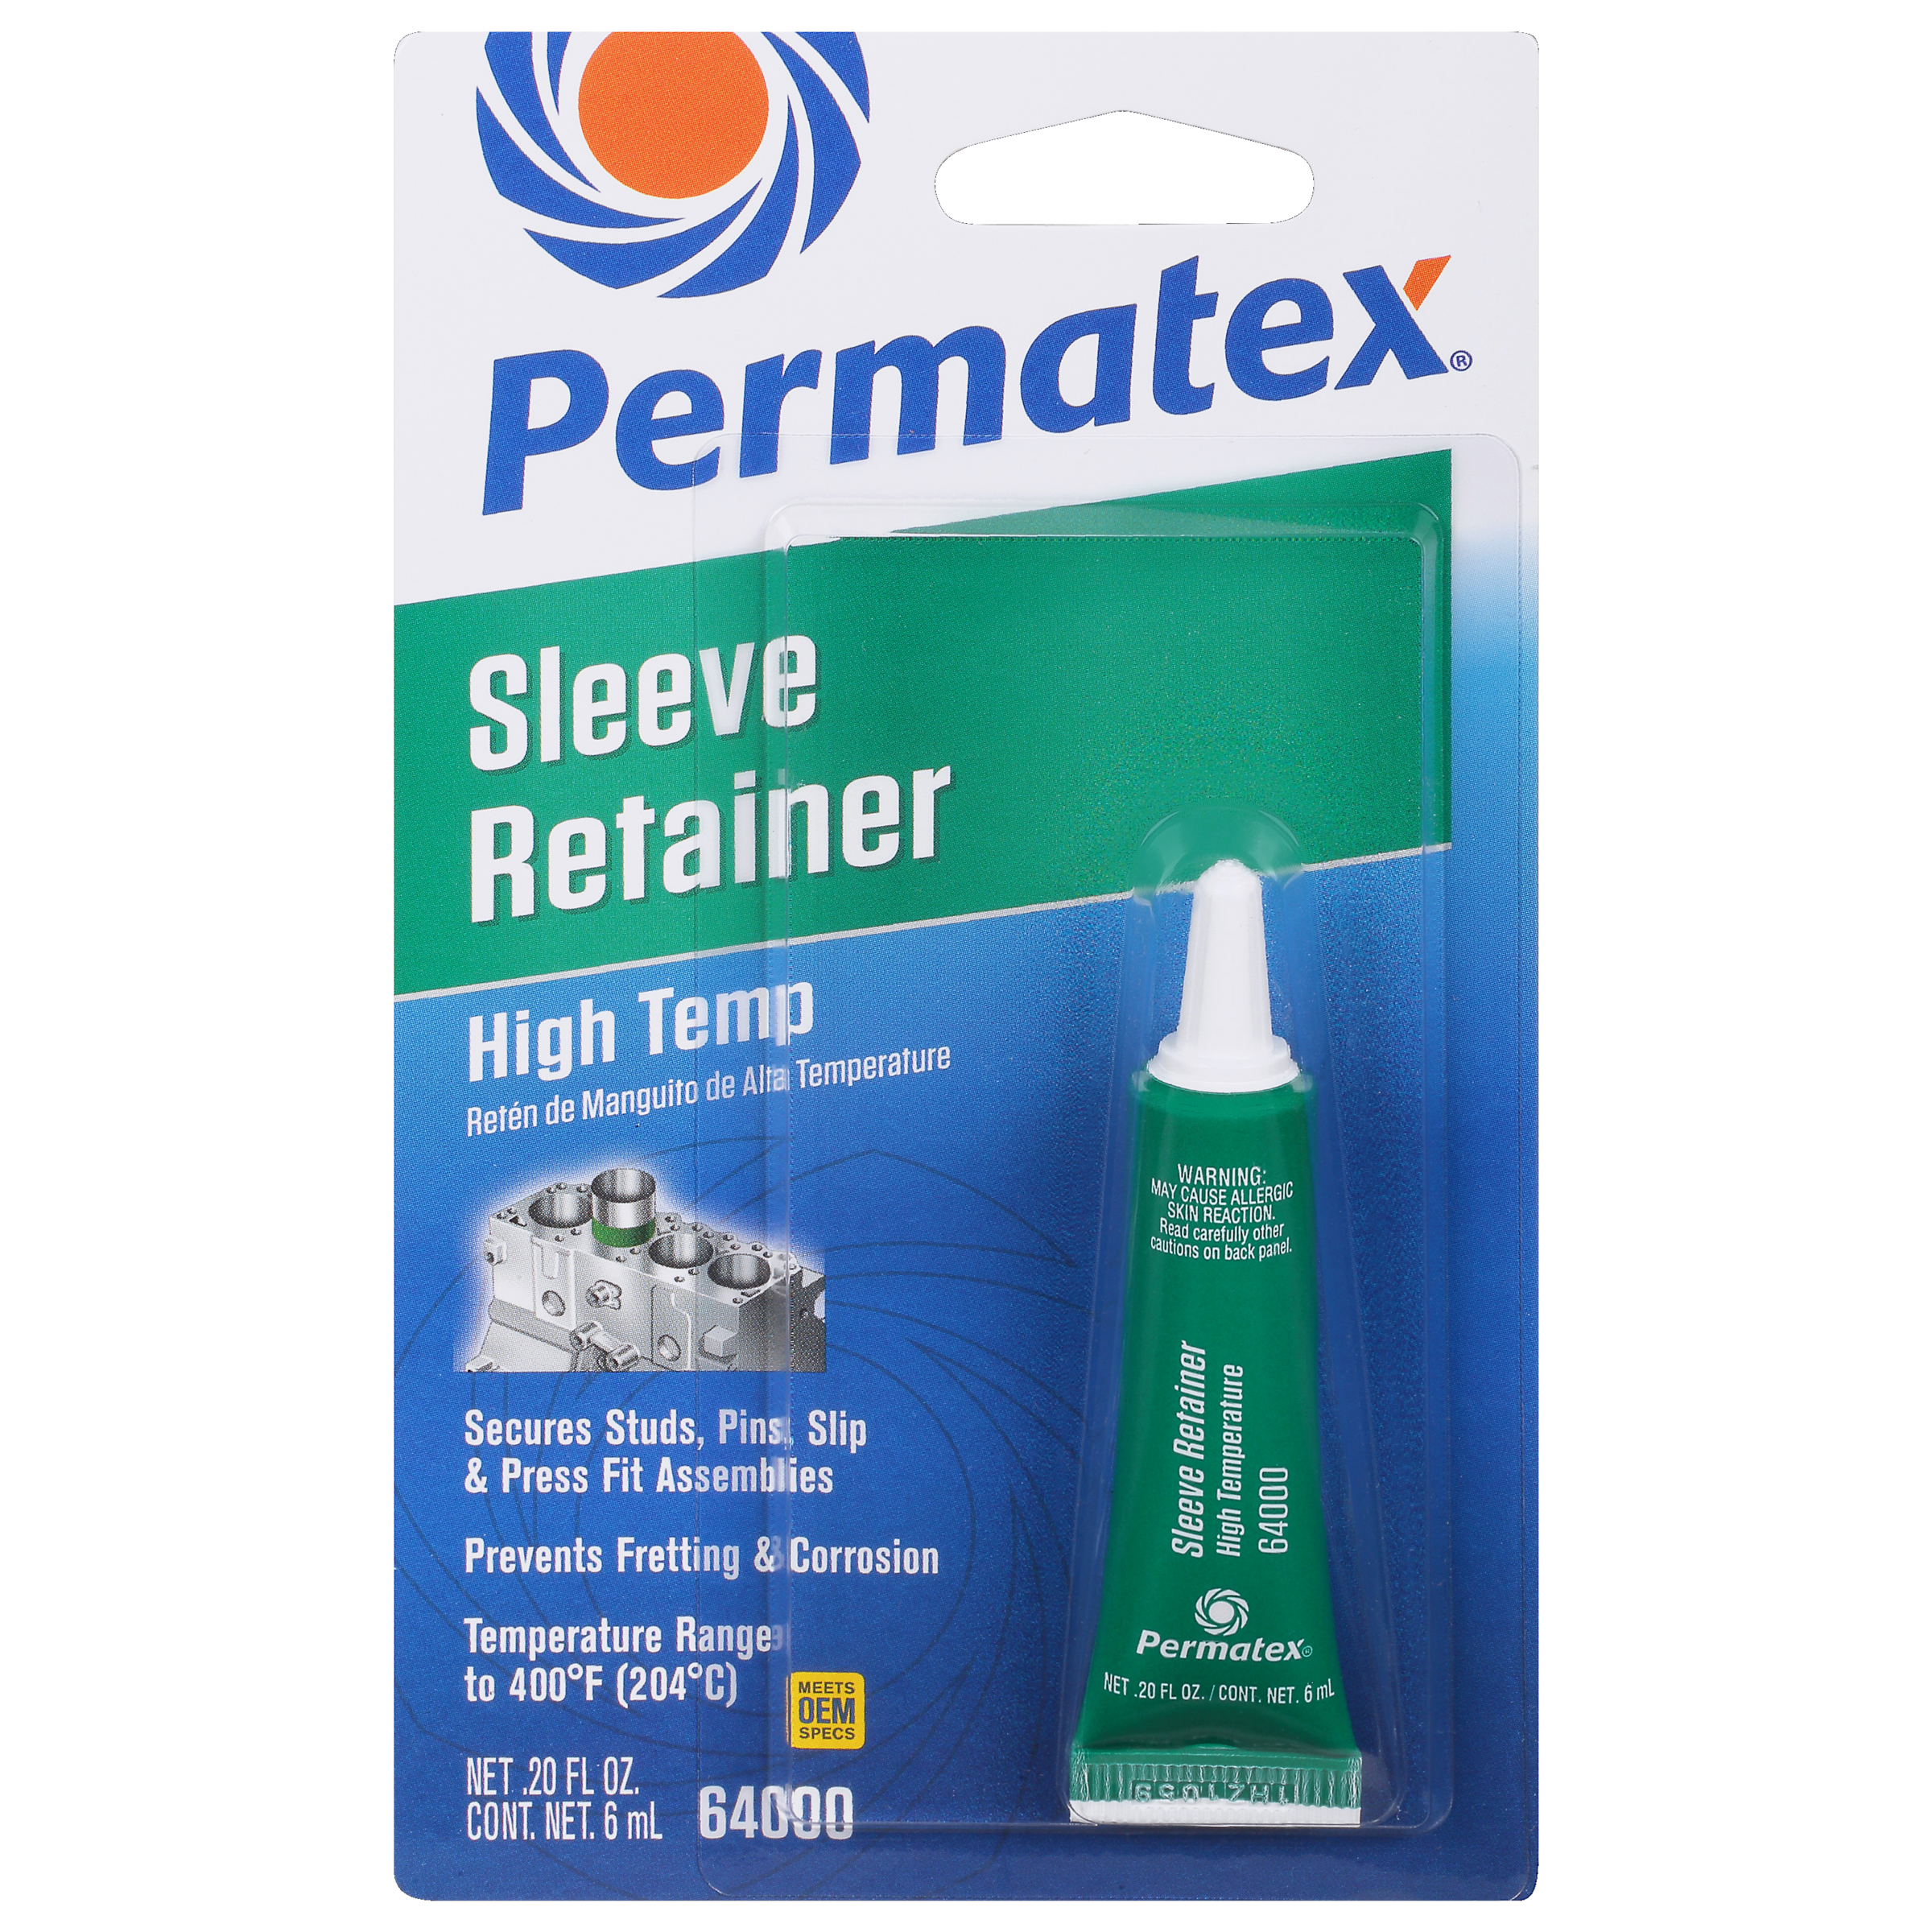 Permatex<span class="sup">®</span> High Temperature Sleeve Retainer, 6 ML